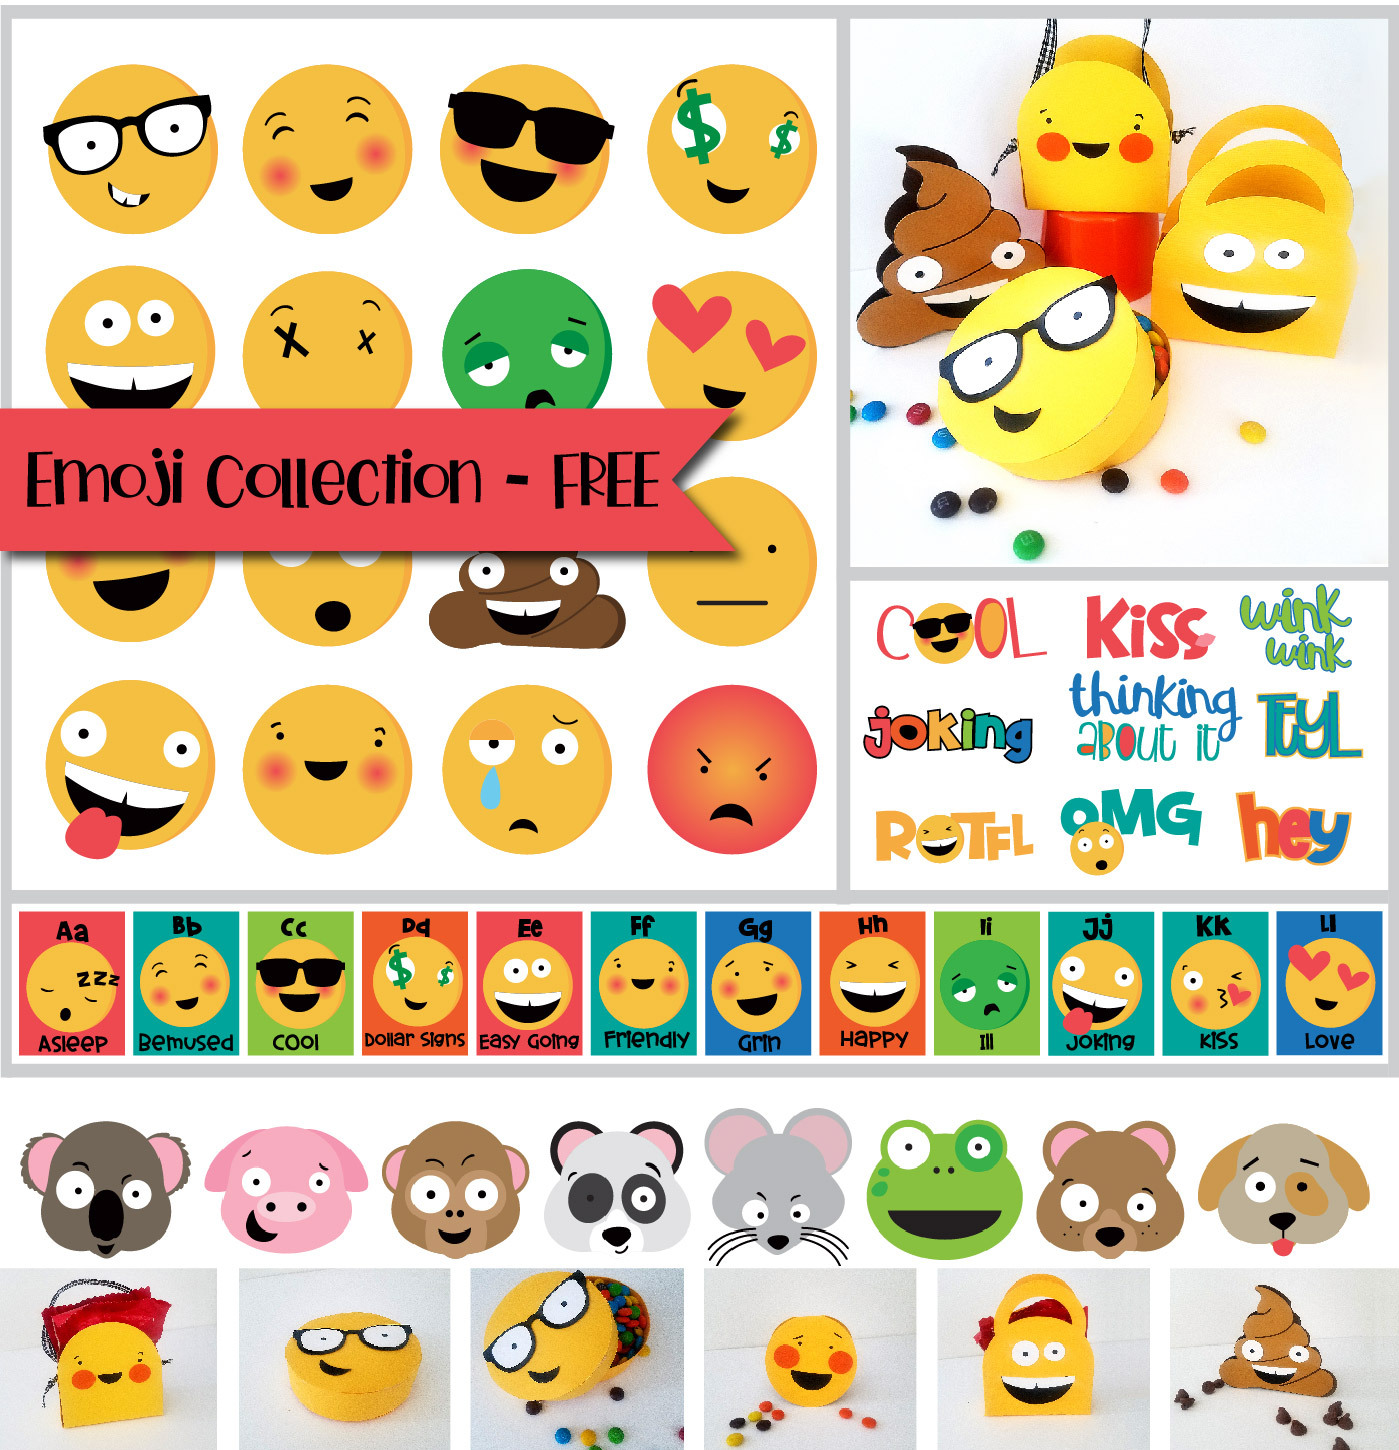 Earn the Emoji - Promotional Bundle - Free